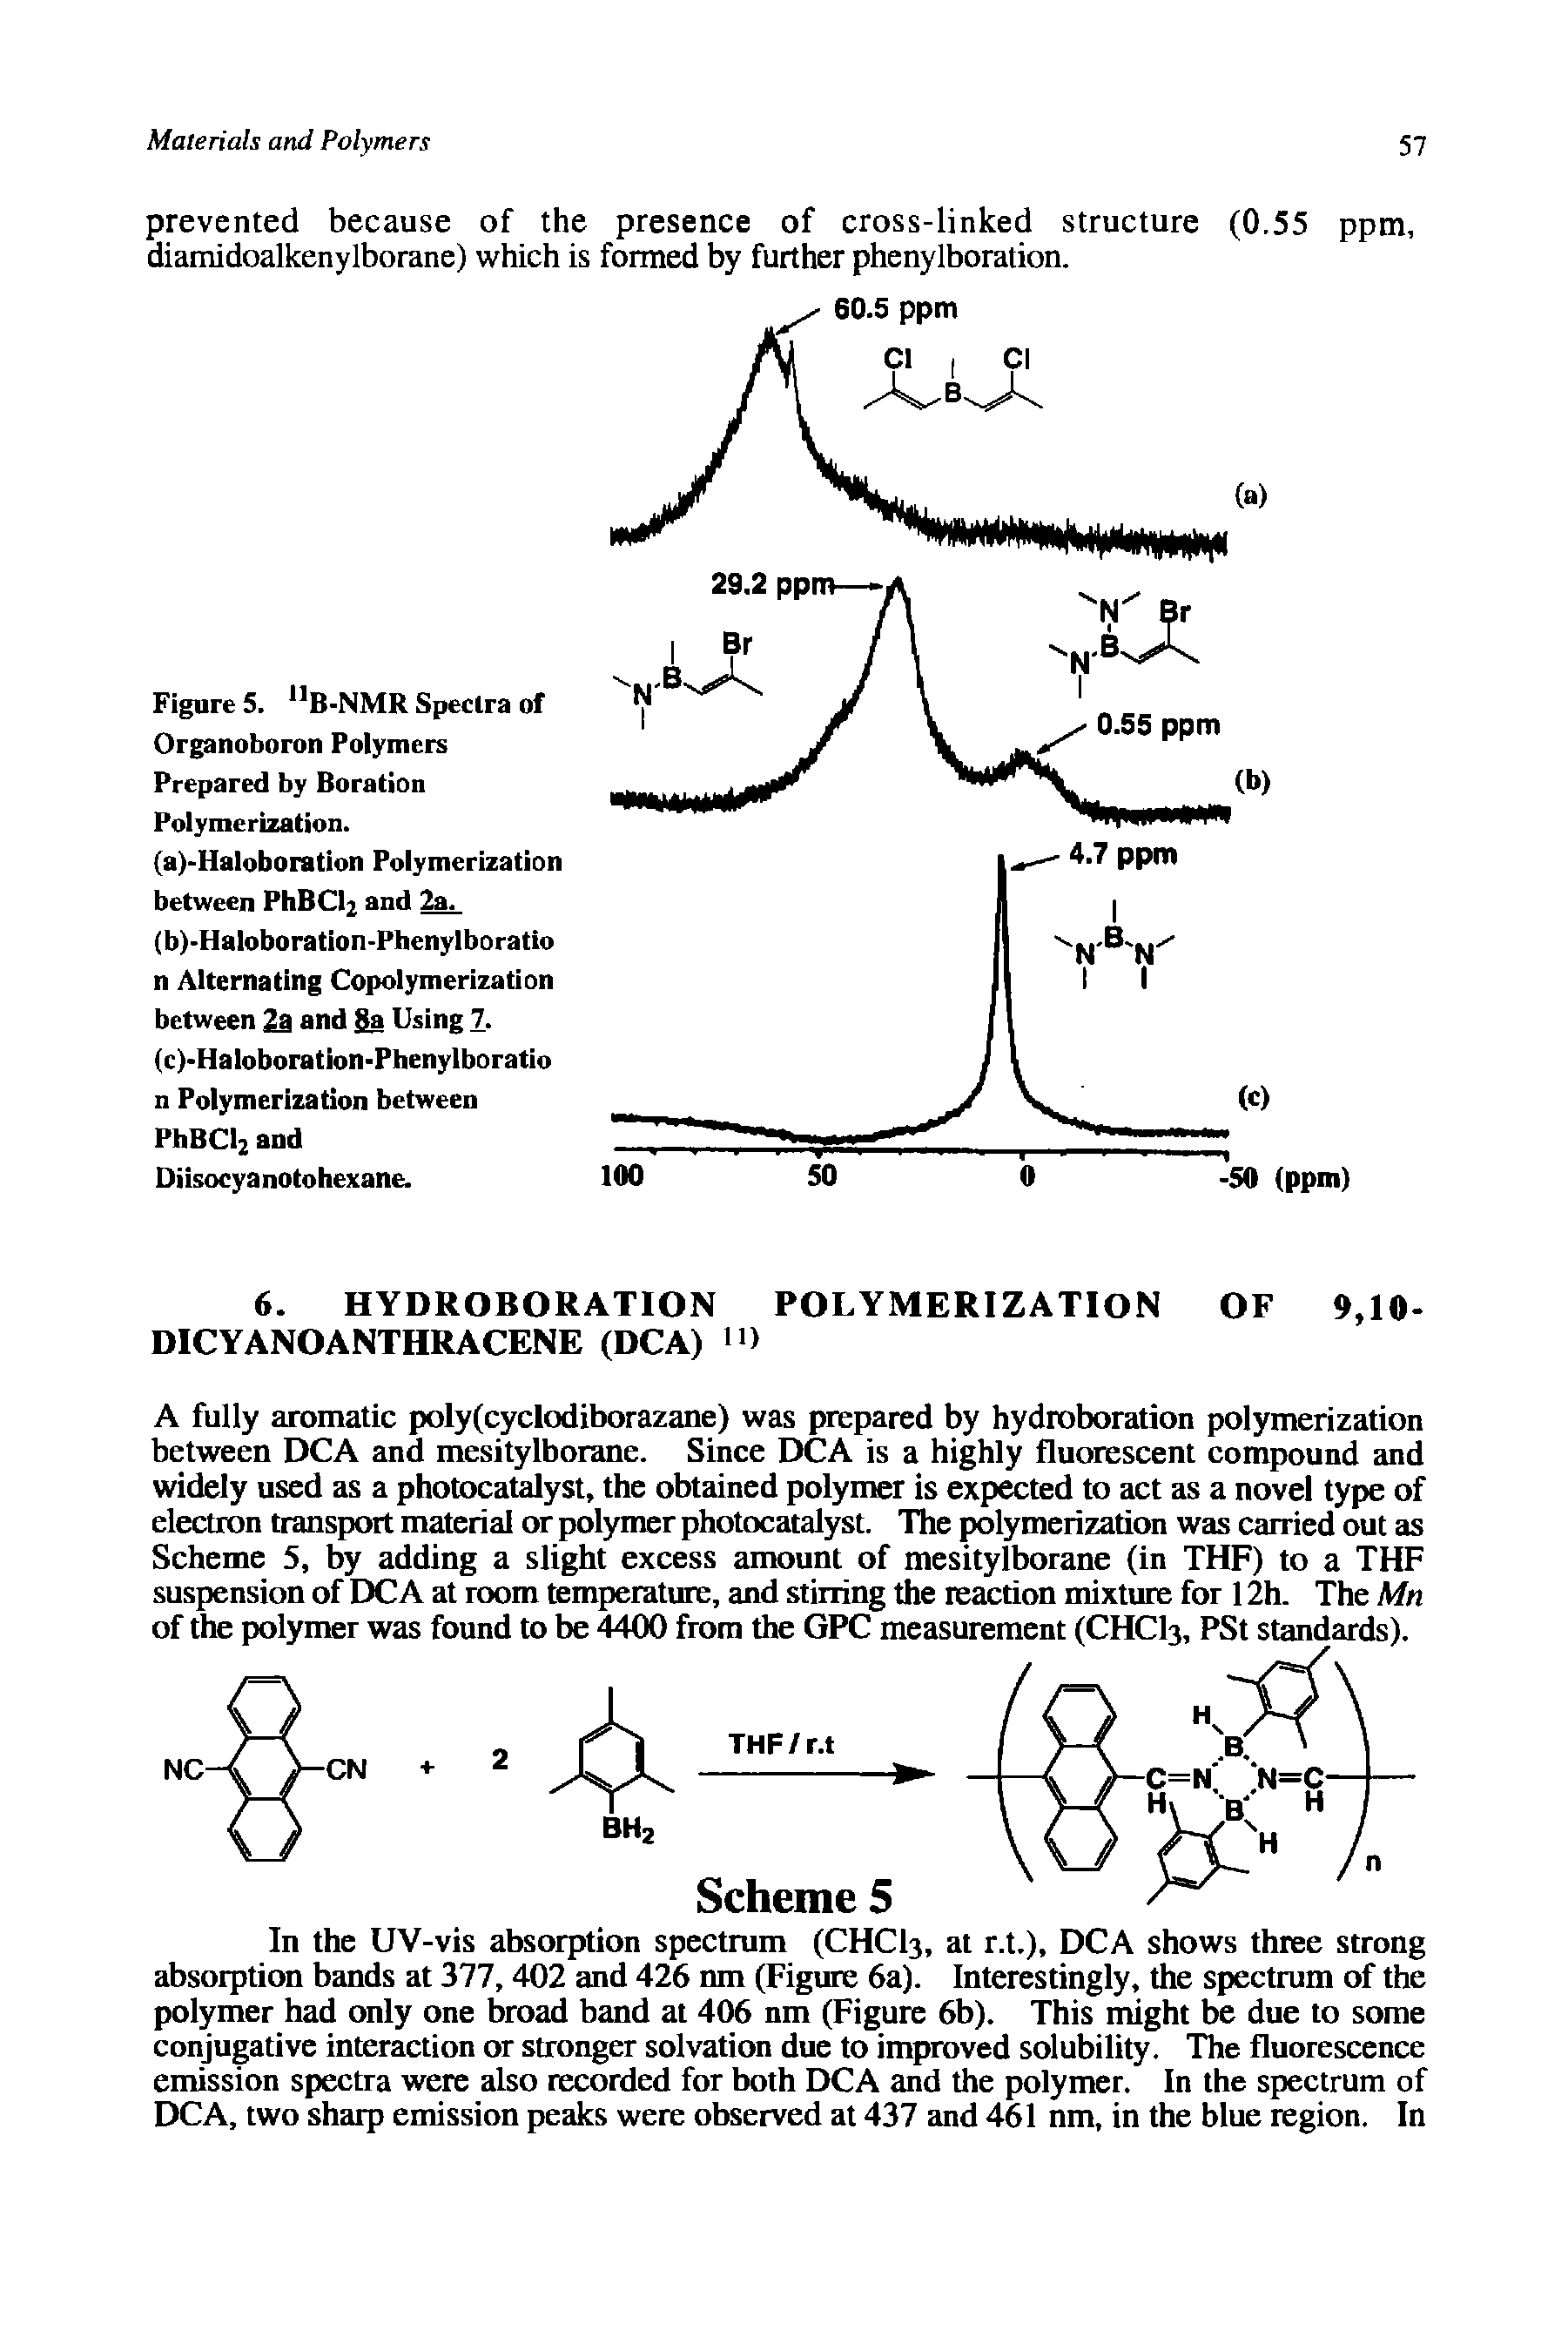 Figure 5., JB-NMR Spectra of Organoboron Polymers Prepared by Boration Polymerization.